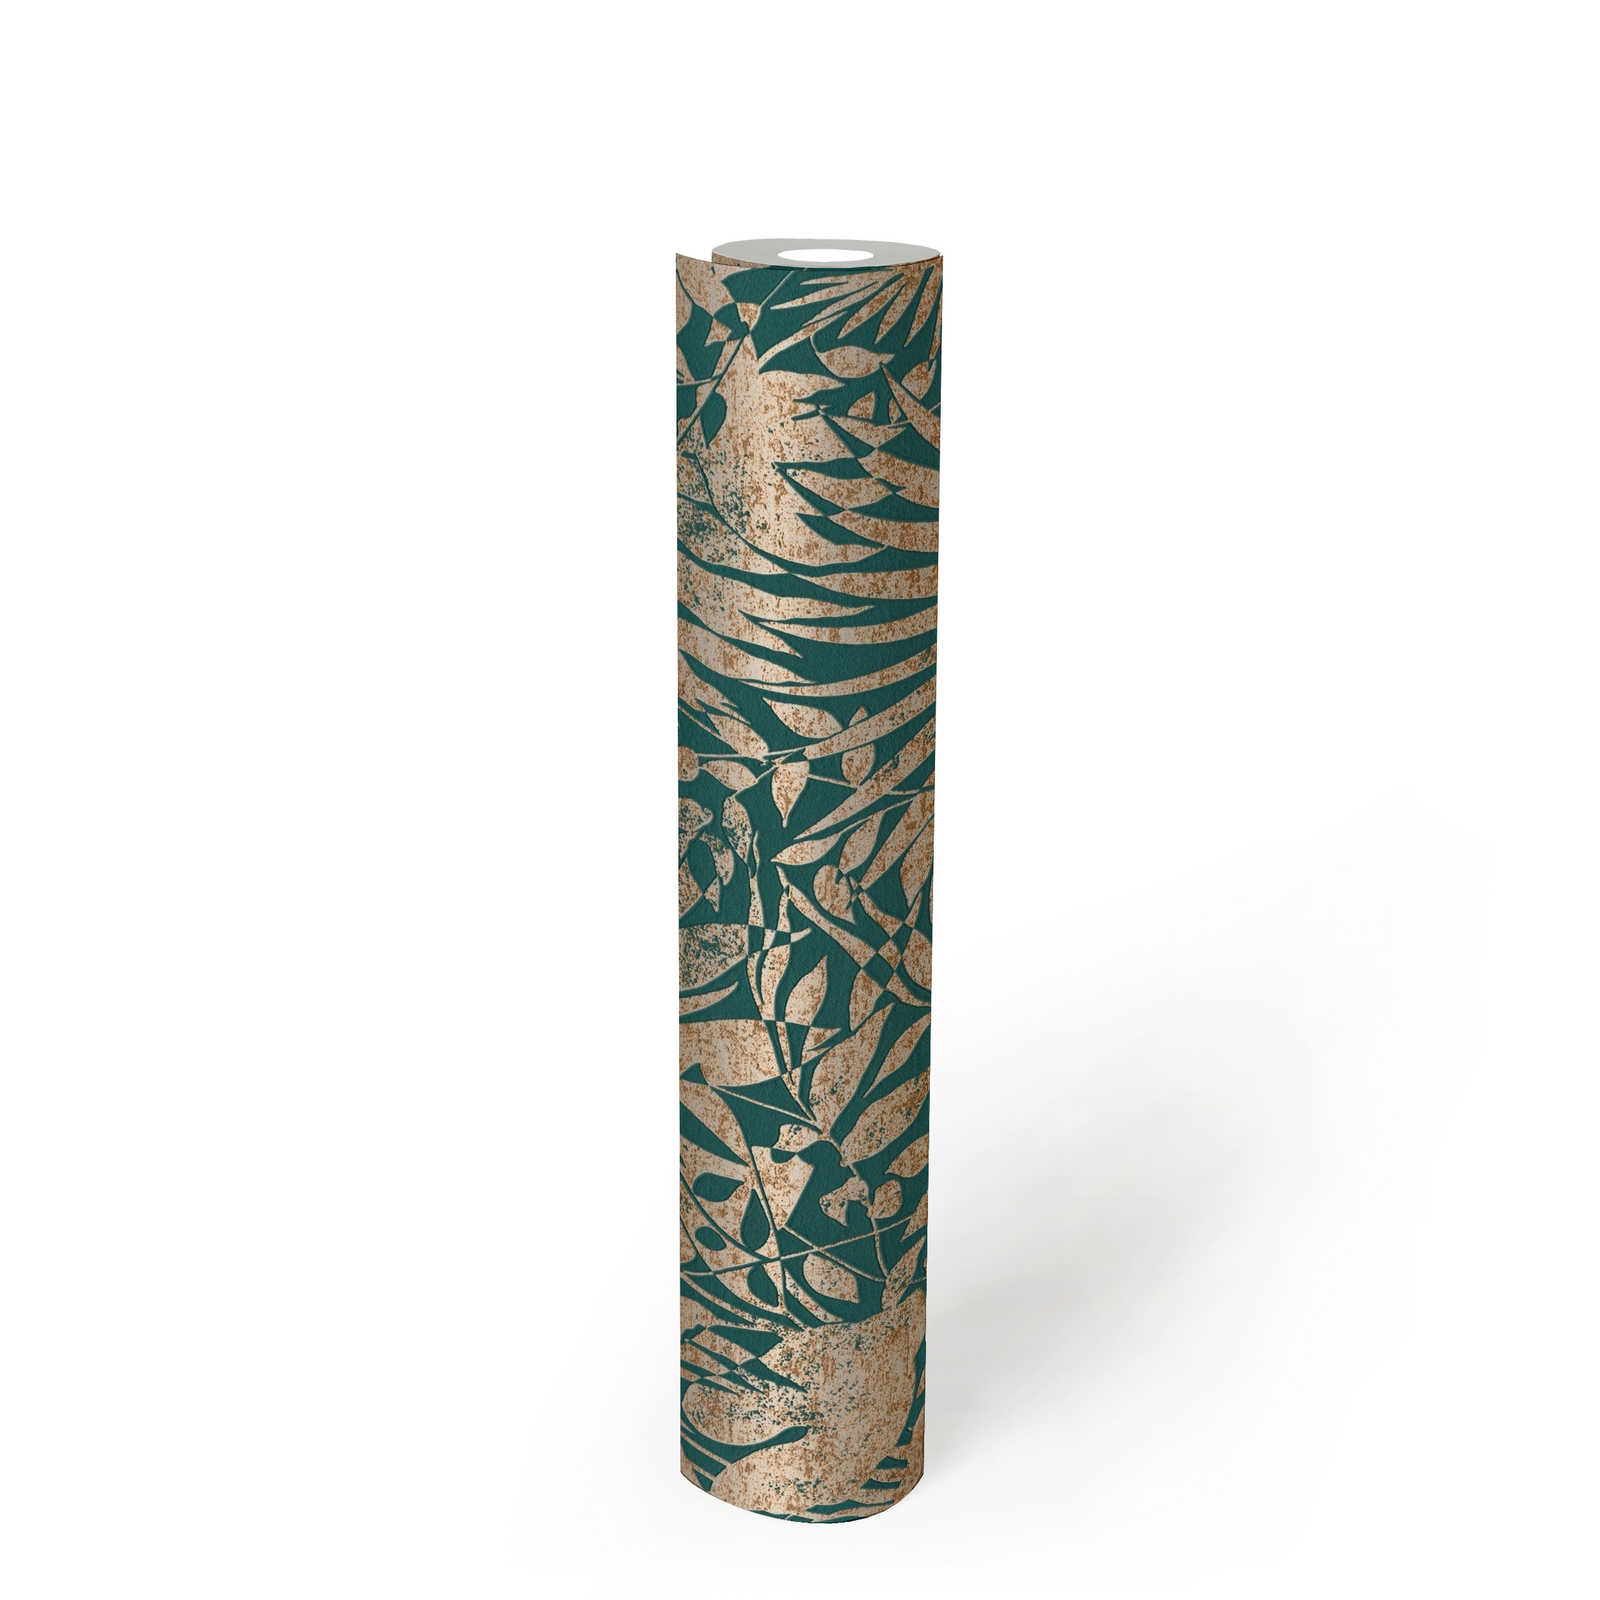             Papier peint vert motif feuilles avec effet texturé métallique
        